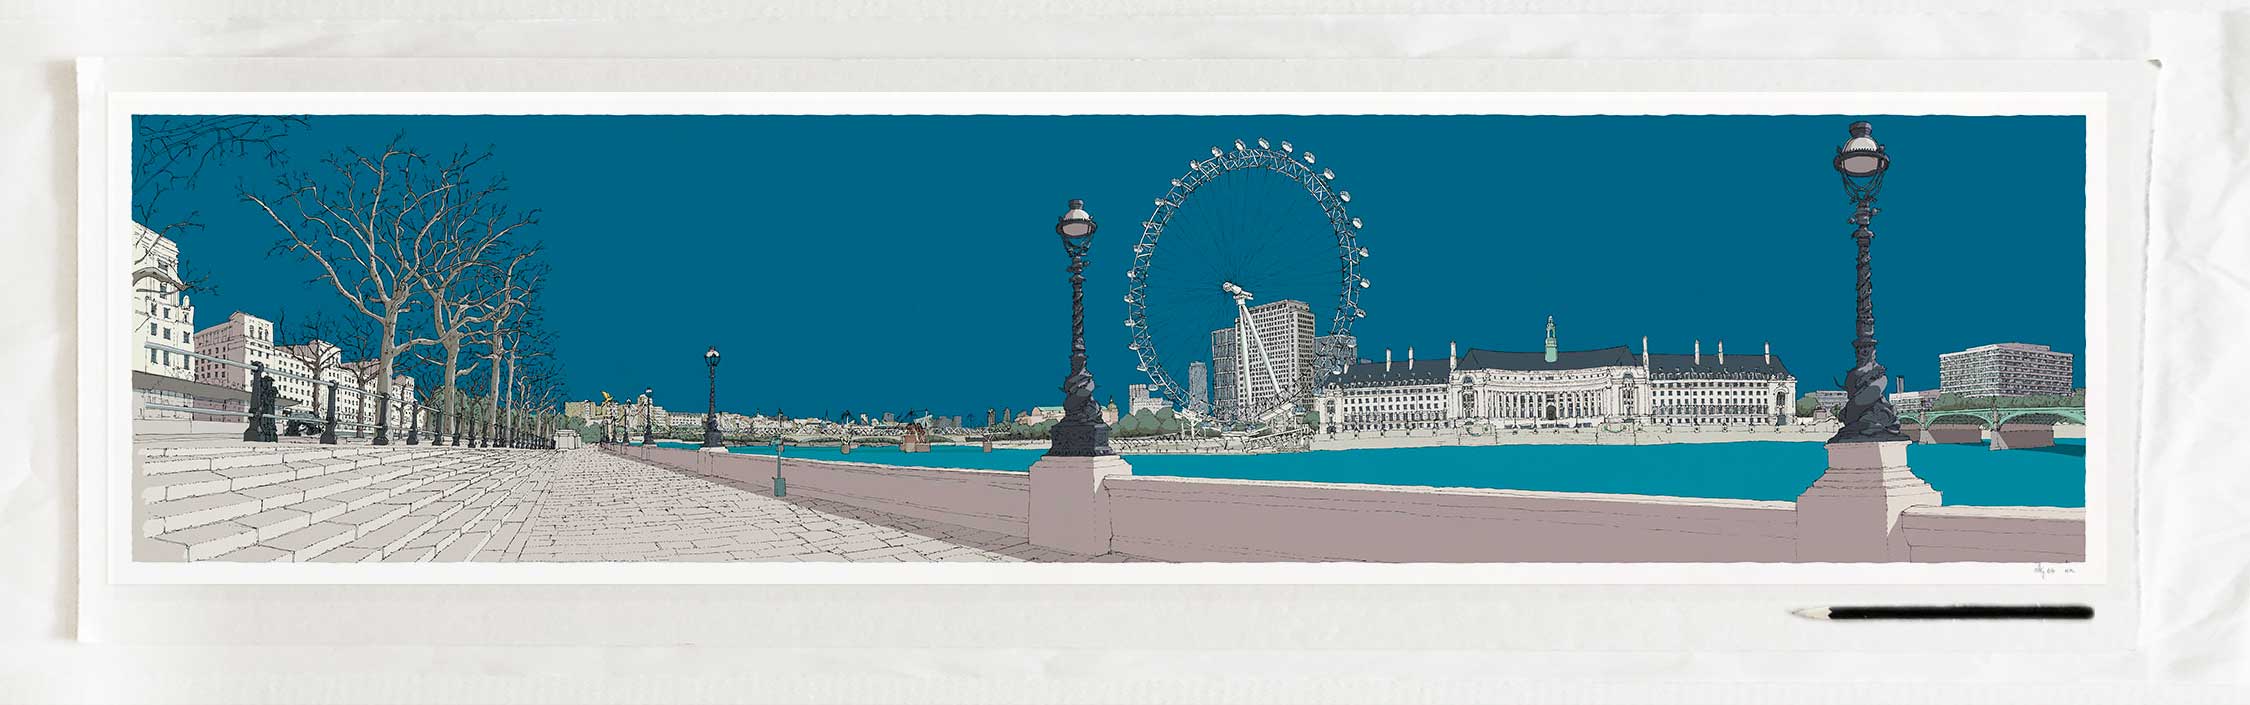 art print titled London River Thames by Westminster Bridge Ocean Blue by artist alej ez